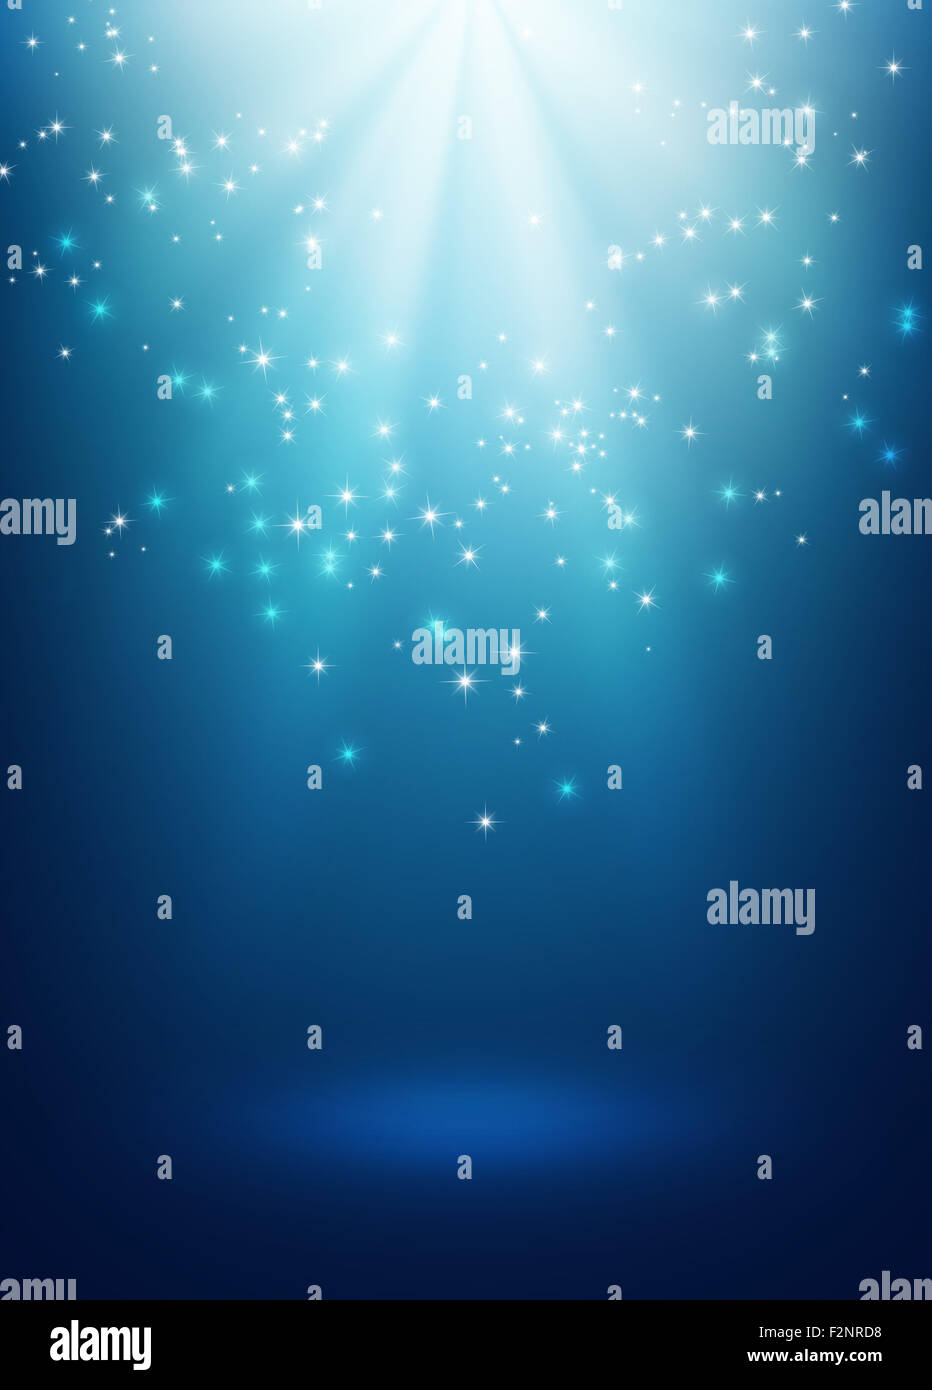 Shiny blue background with starlight raining down Stock Photo